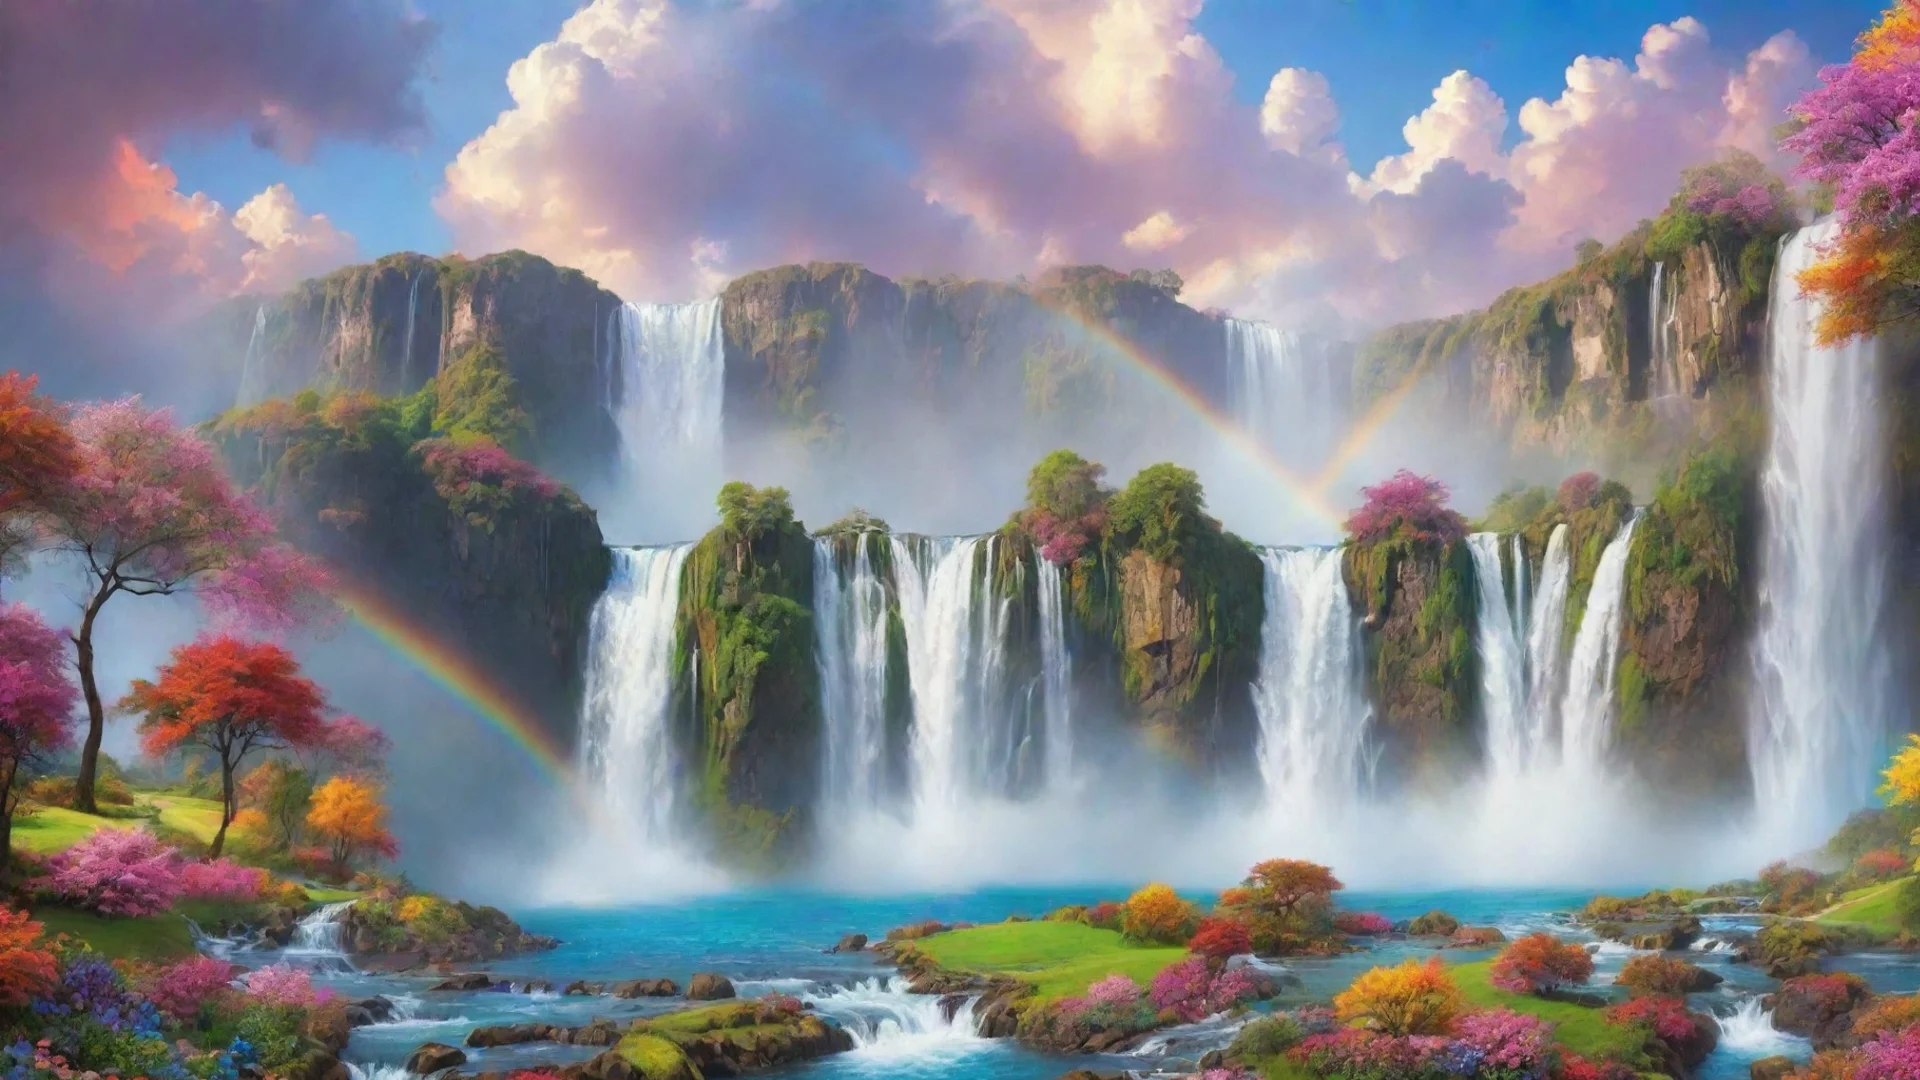 aitrending dreamy colorful landscape alian world amazing beautiful utopian colors flowers waterfalls rainbows clouds good looking fantastic 1 wide